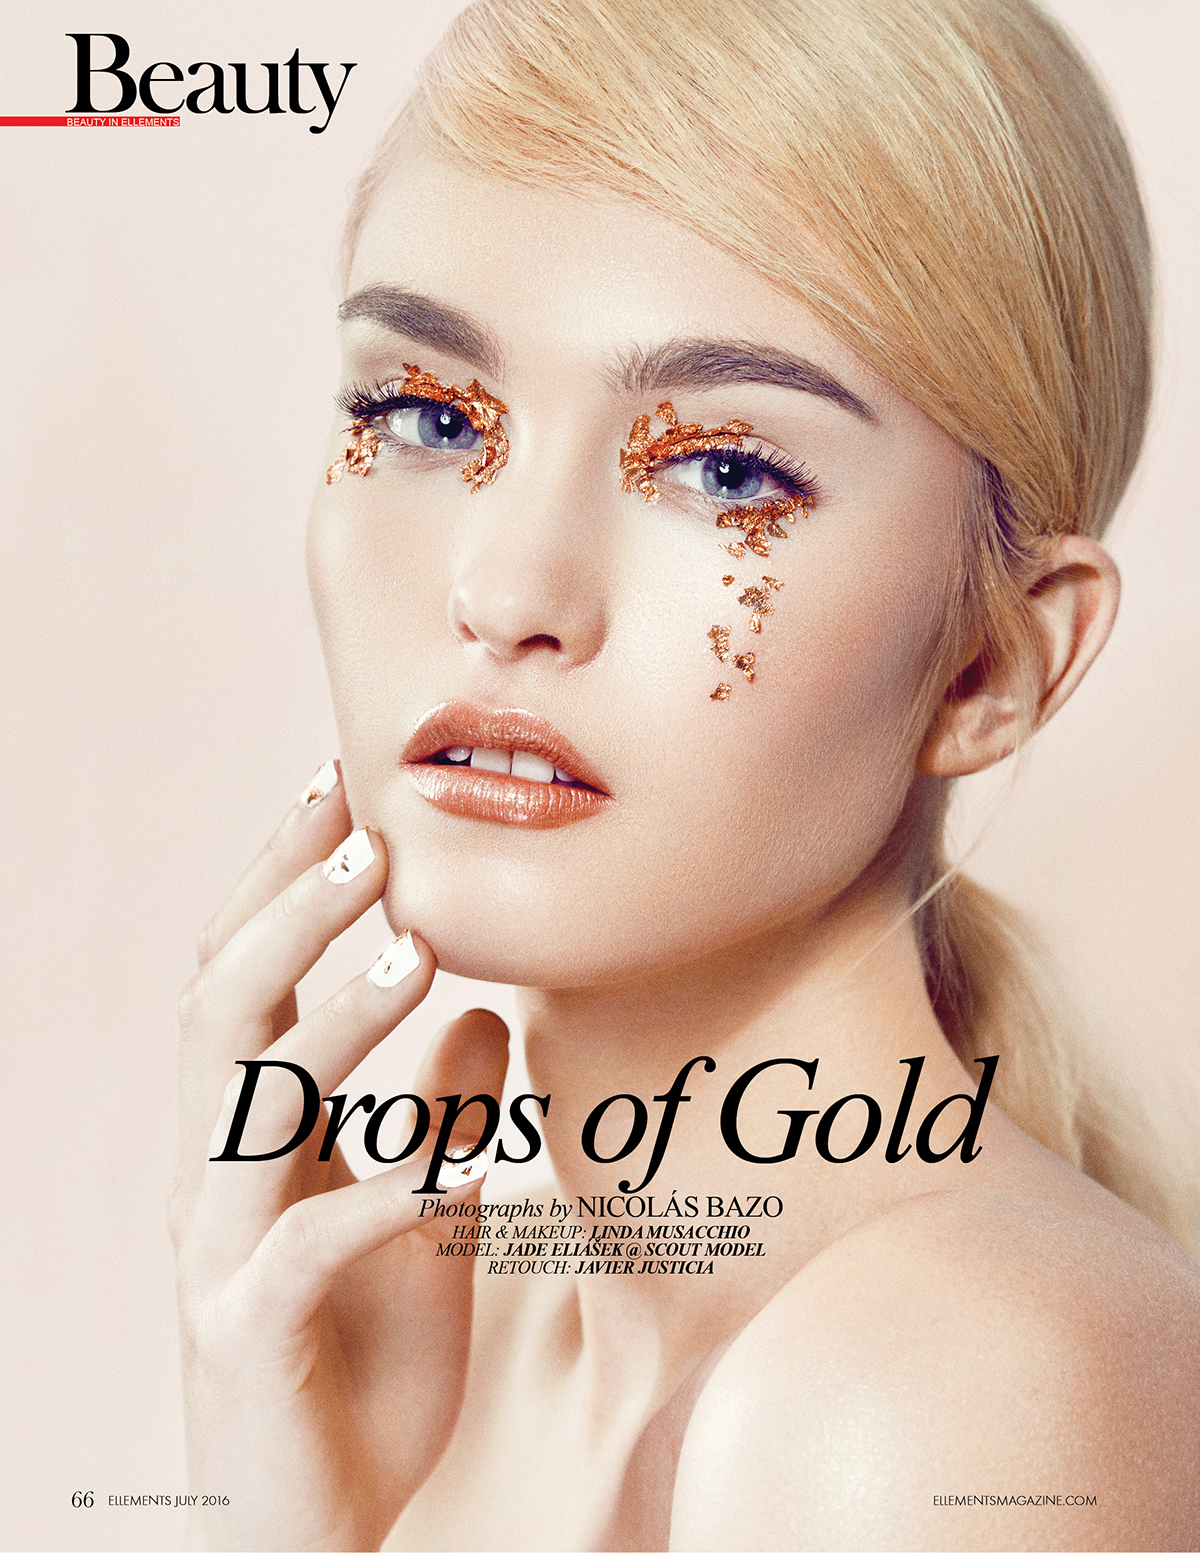 Adobe Portfolio nicolas bazo bazo ellements Ellements Magazine beauty